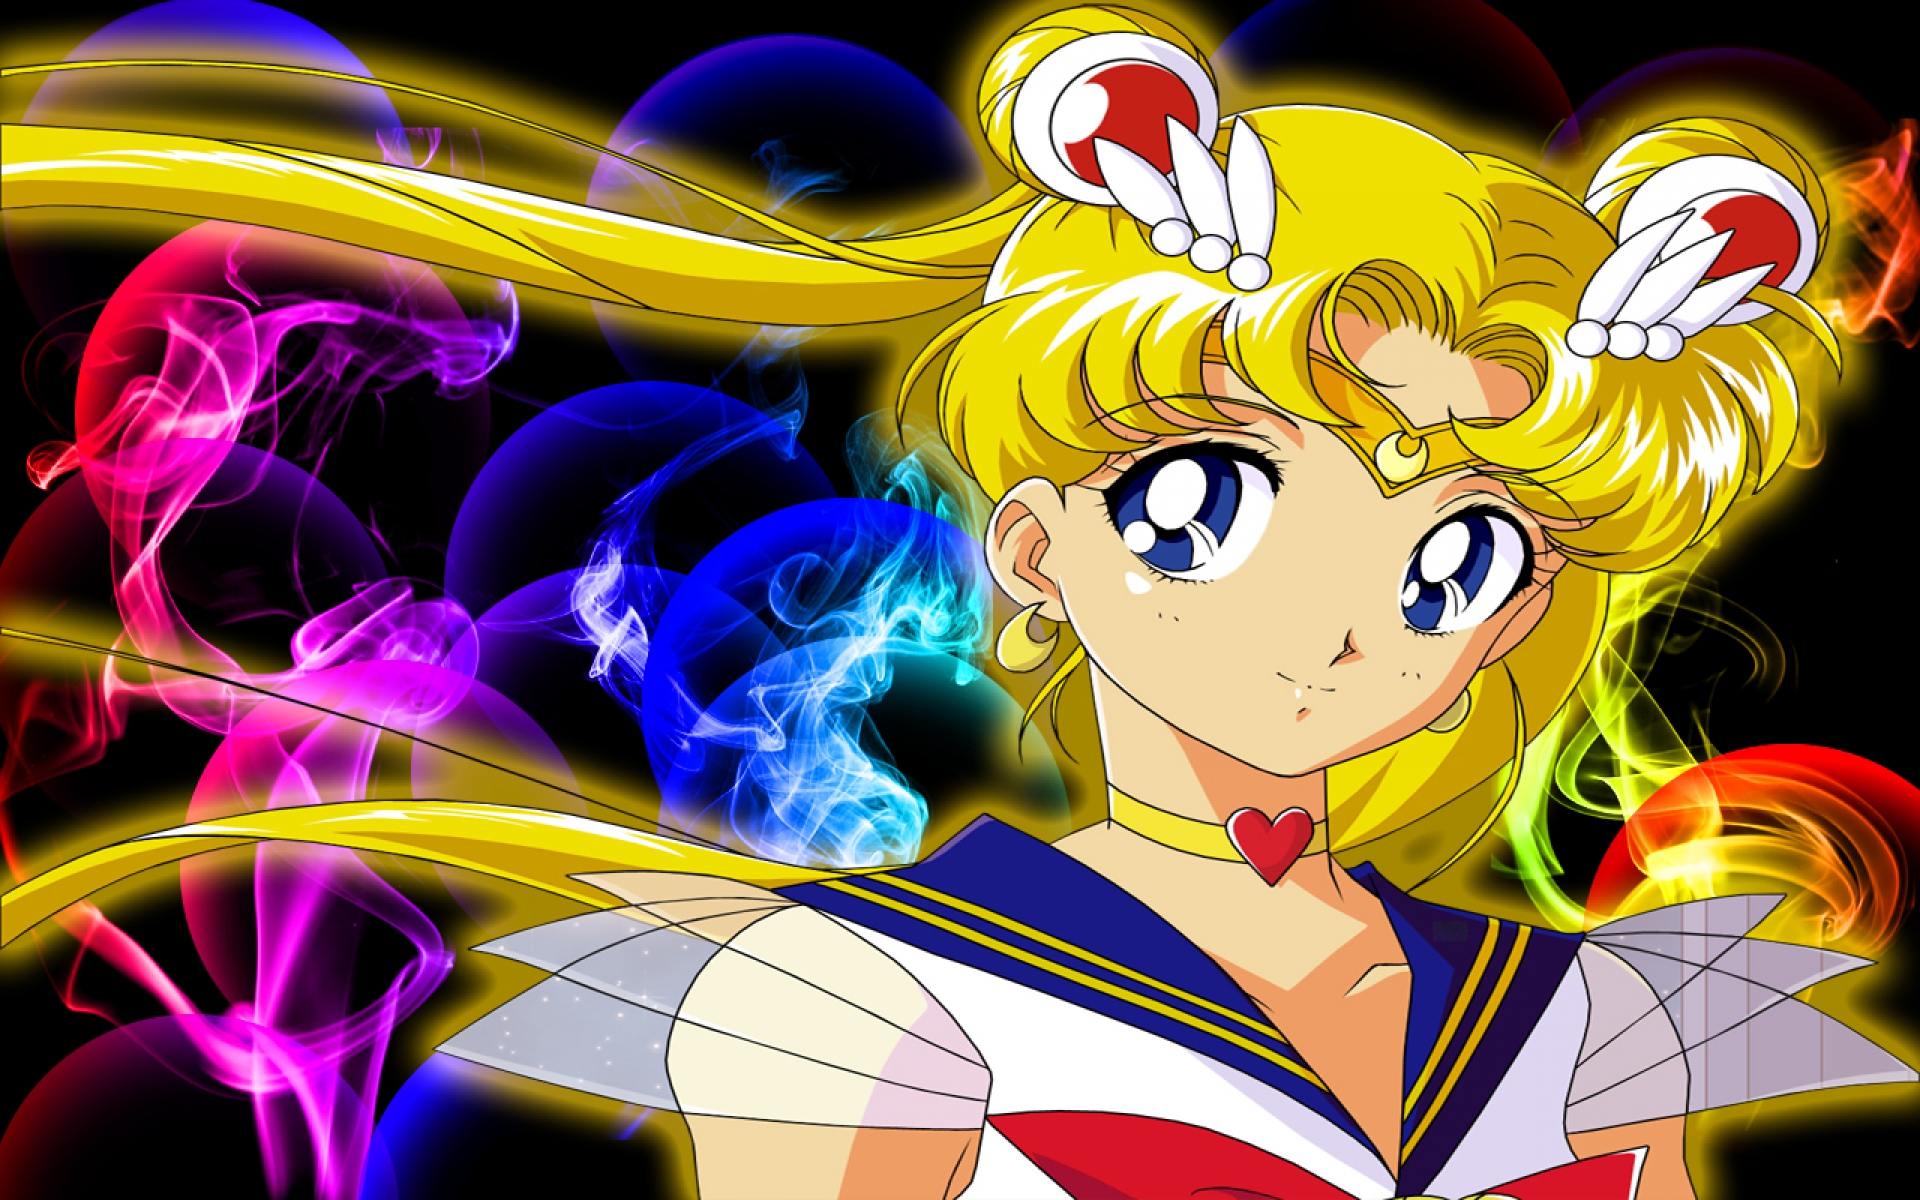 [50+] Sailor Moon Wallpaper Desktop | Wallpapersafari.com